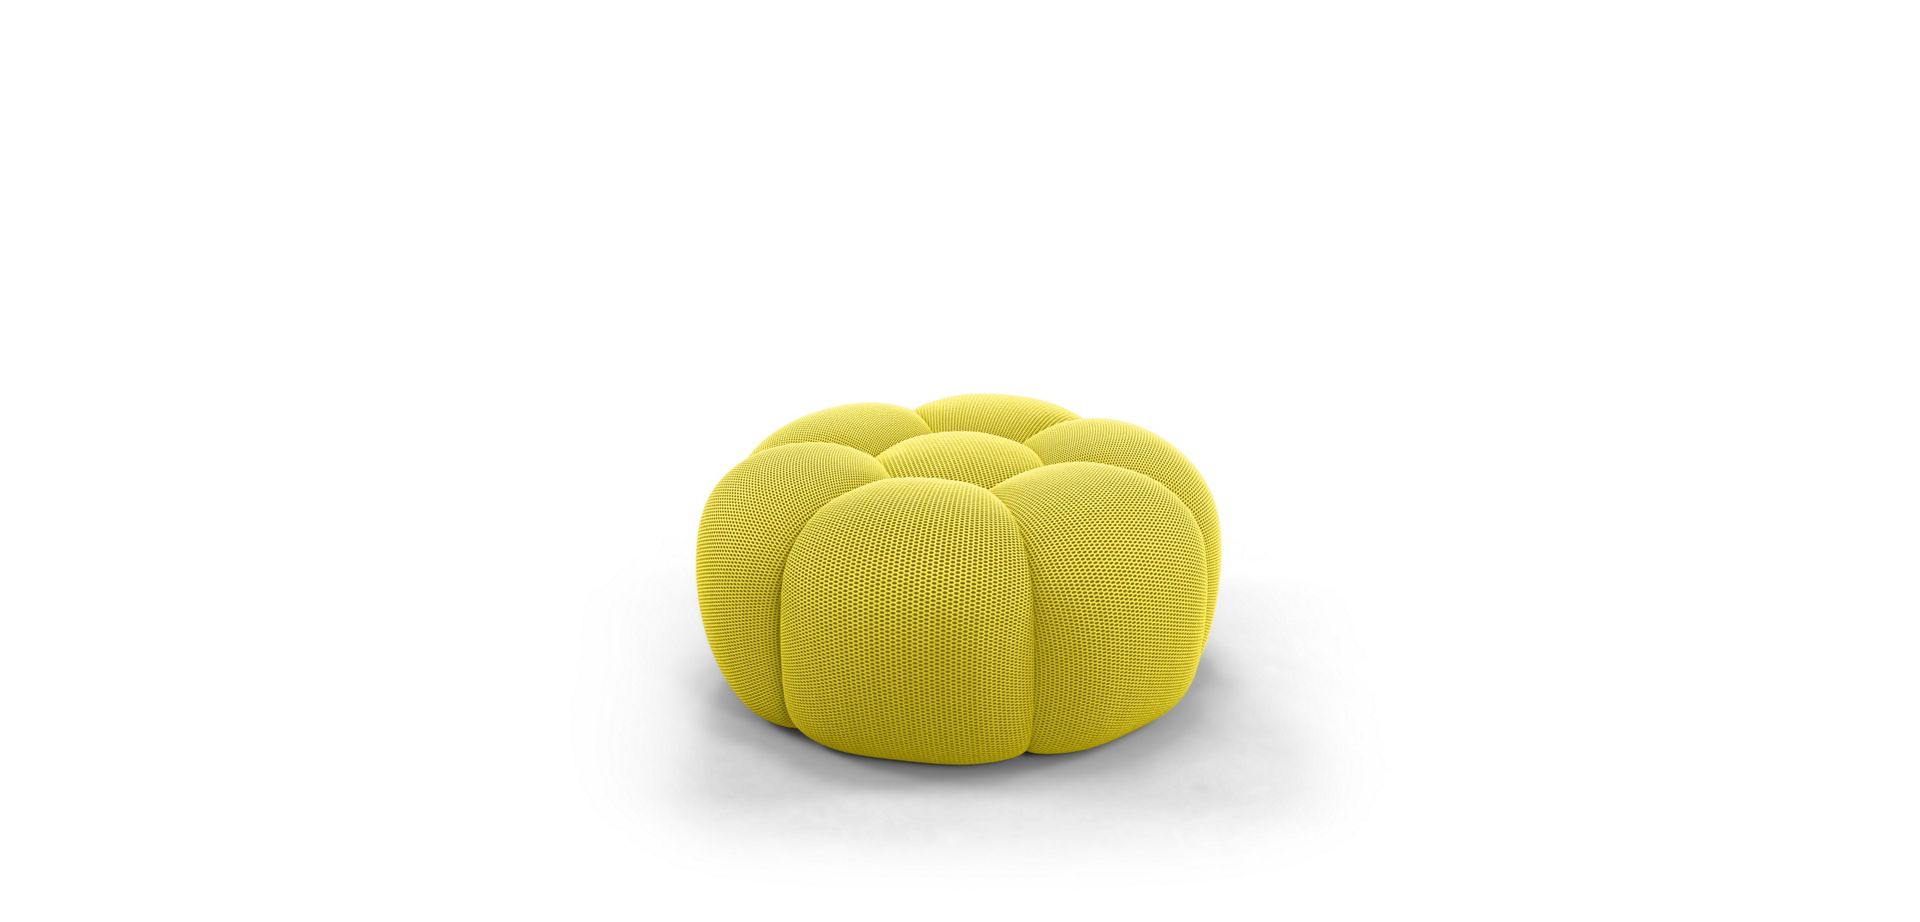 gran sofá 3 plazas - techno 3D image number 14